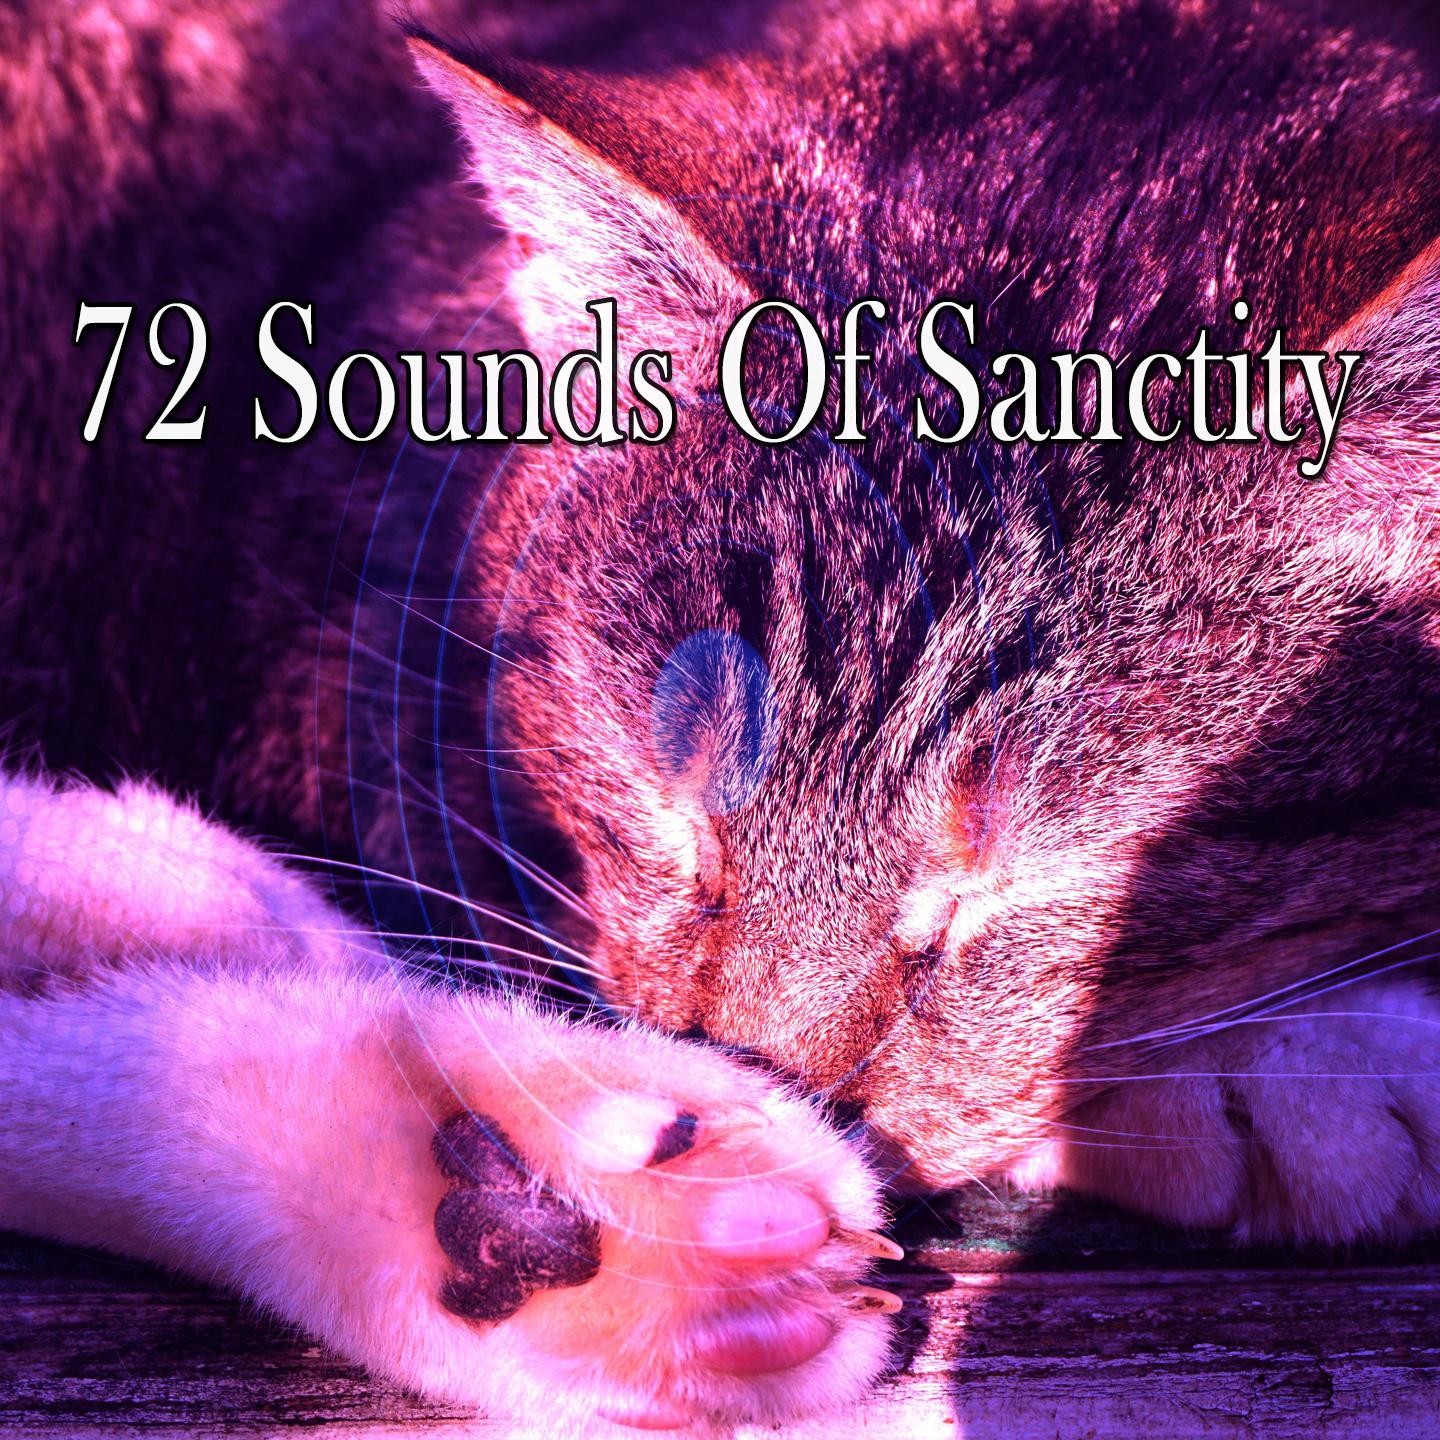 72 Sounds of Sanctity